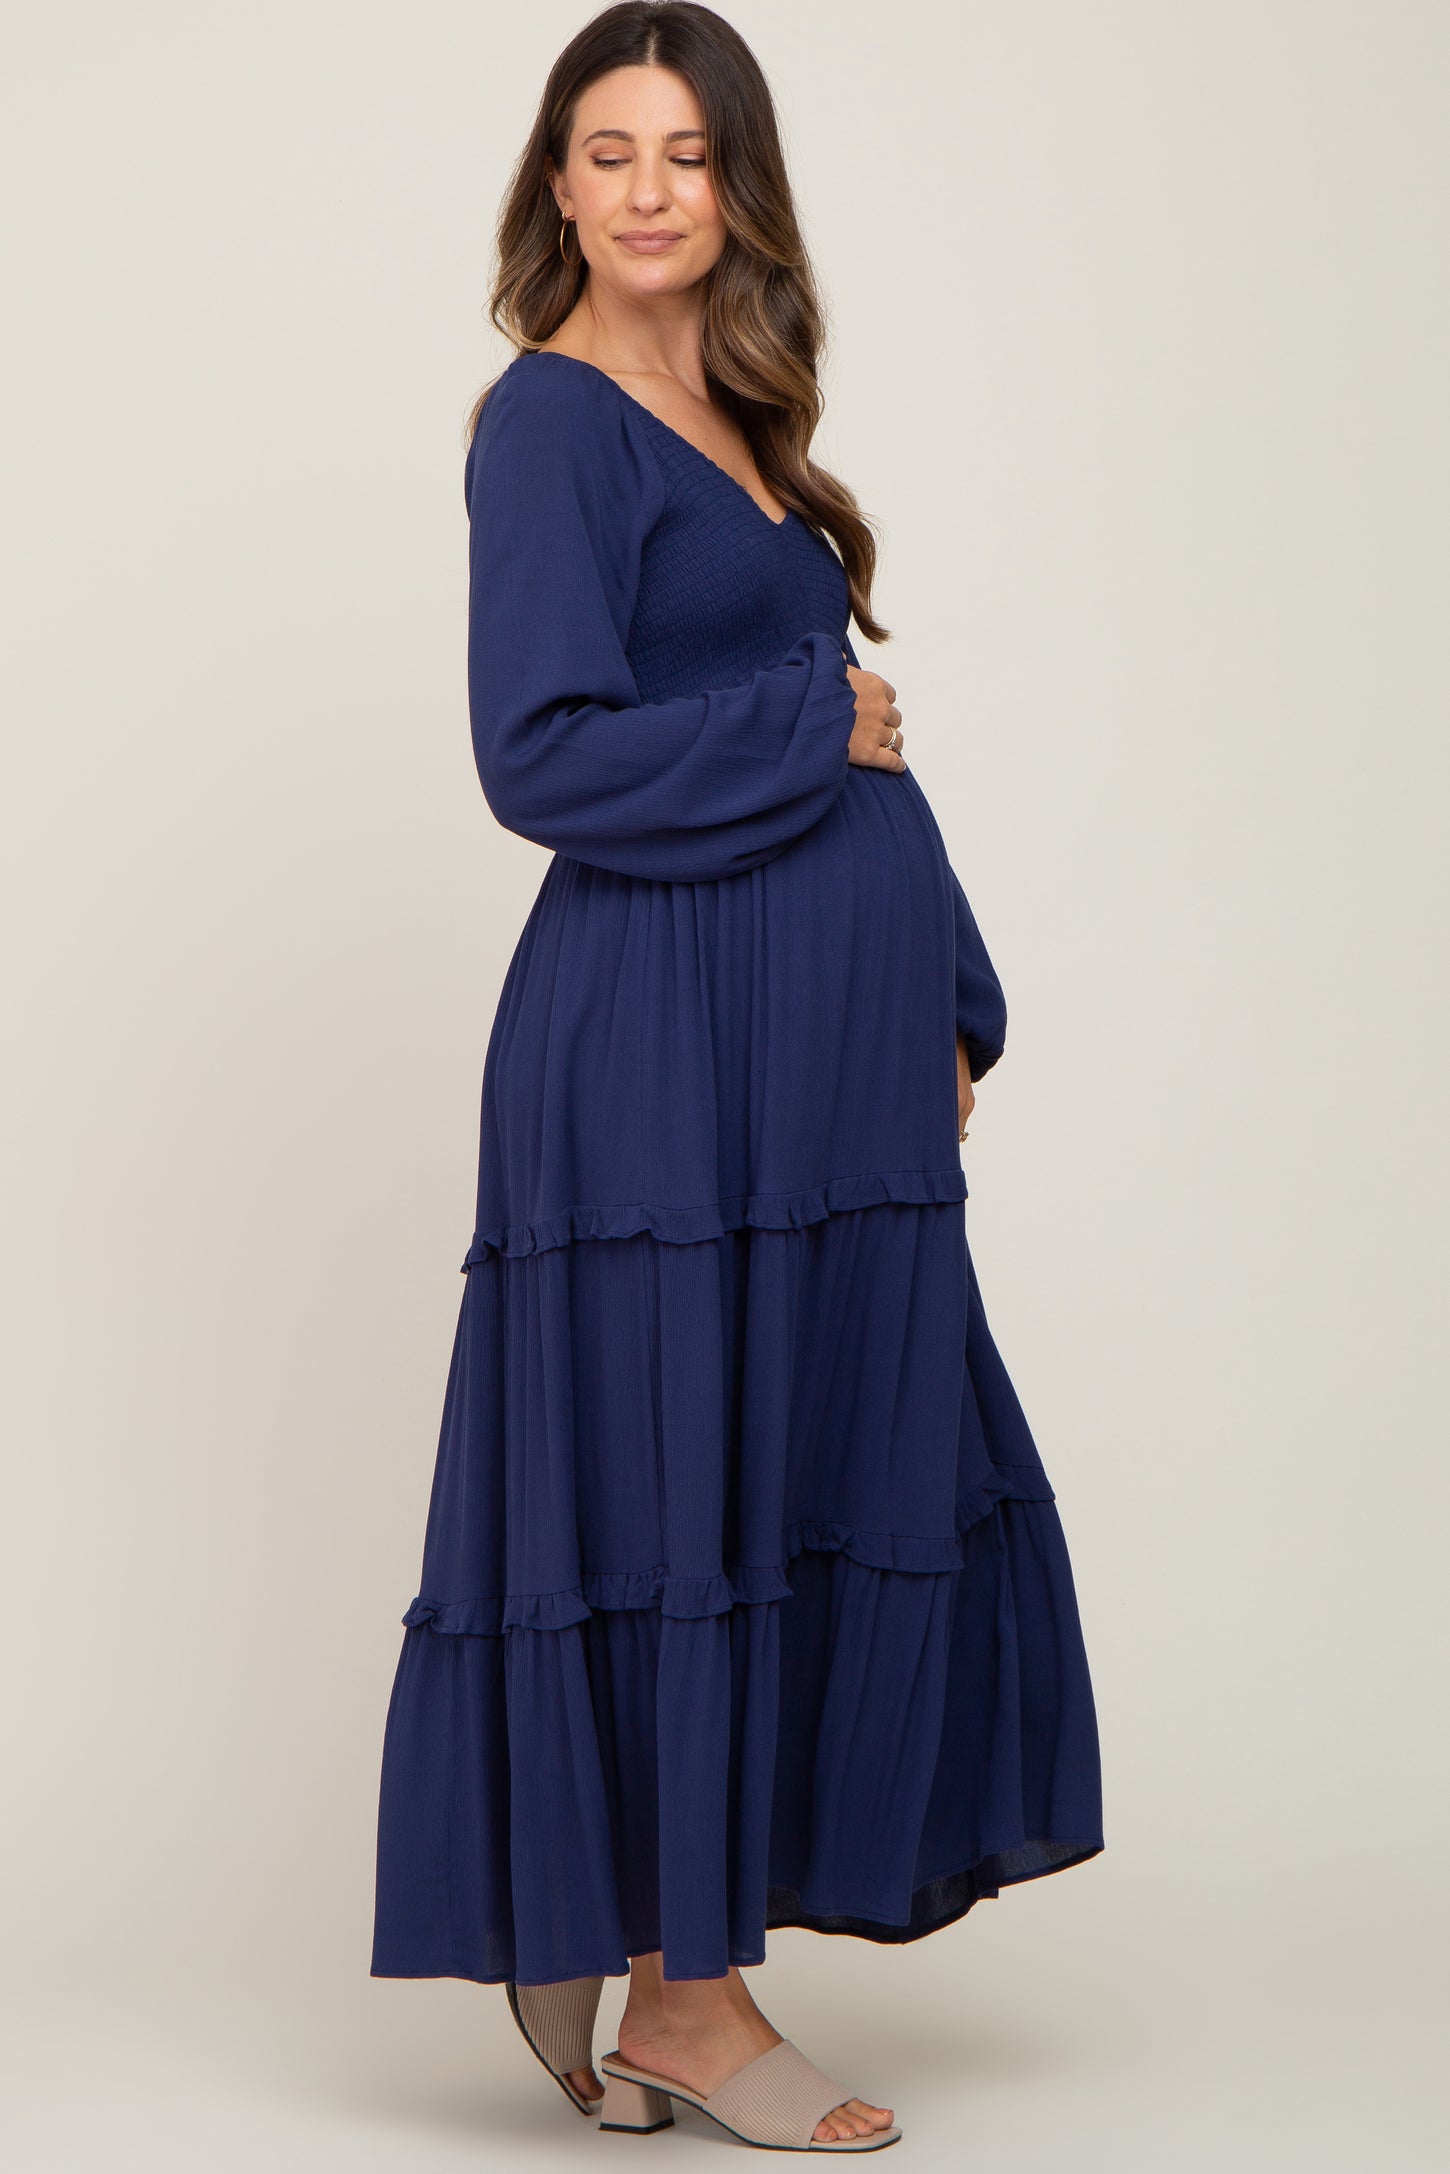 Navy Blue Smocked Tiered Maternity Midi Dress – PinkBlush